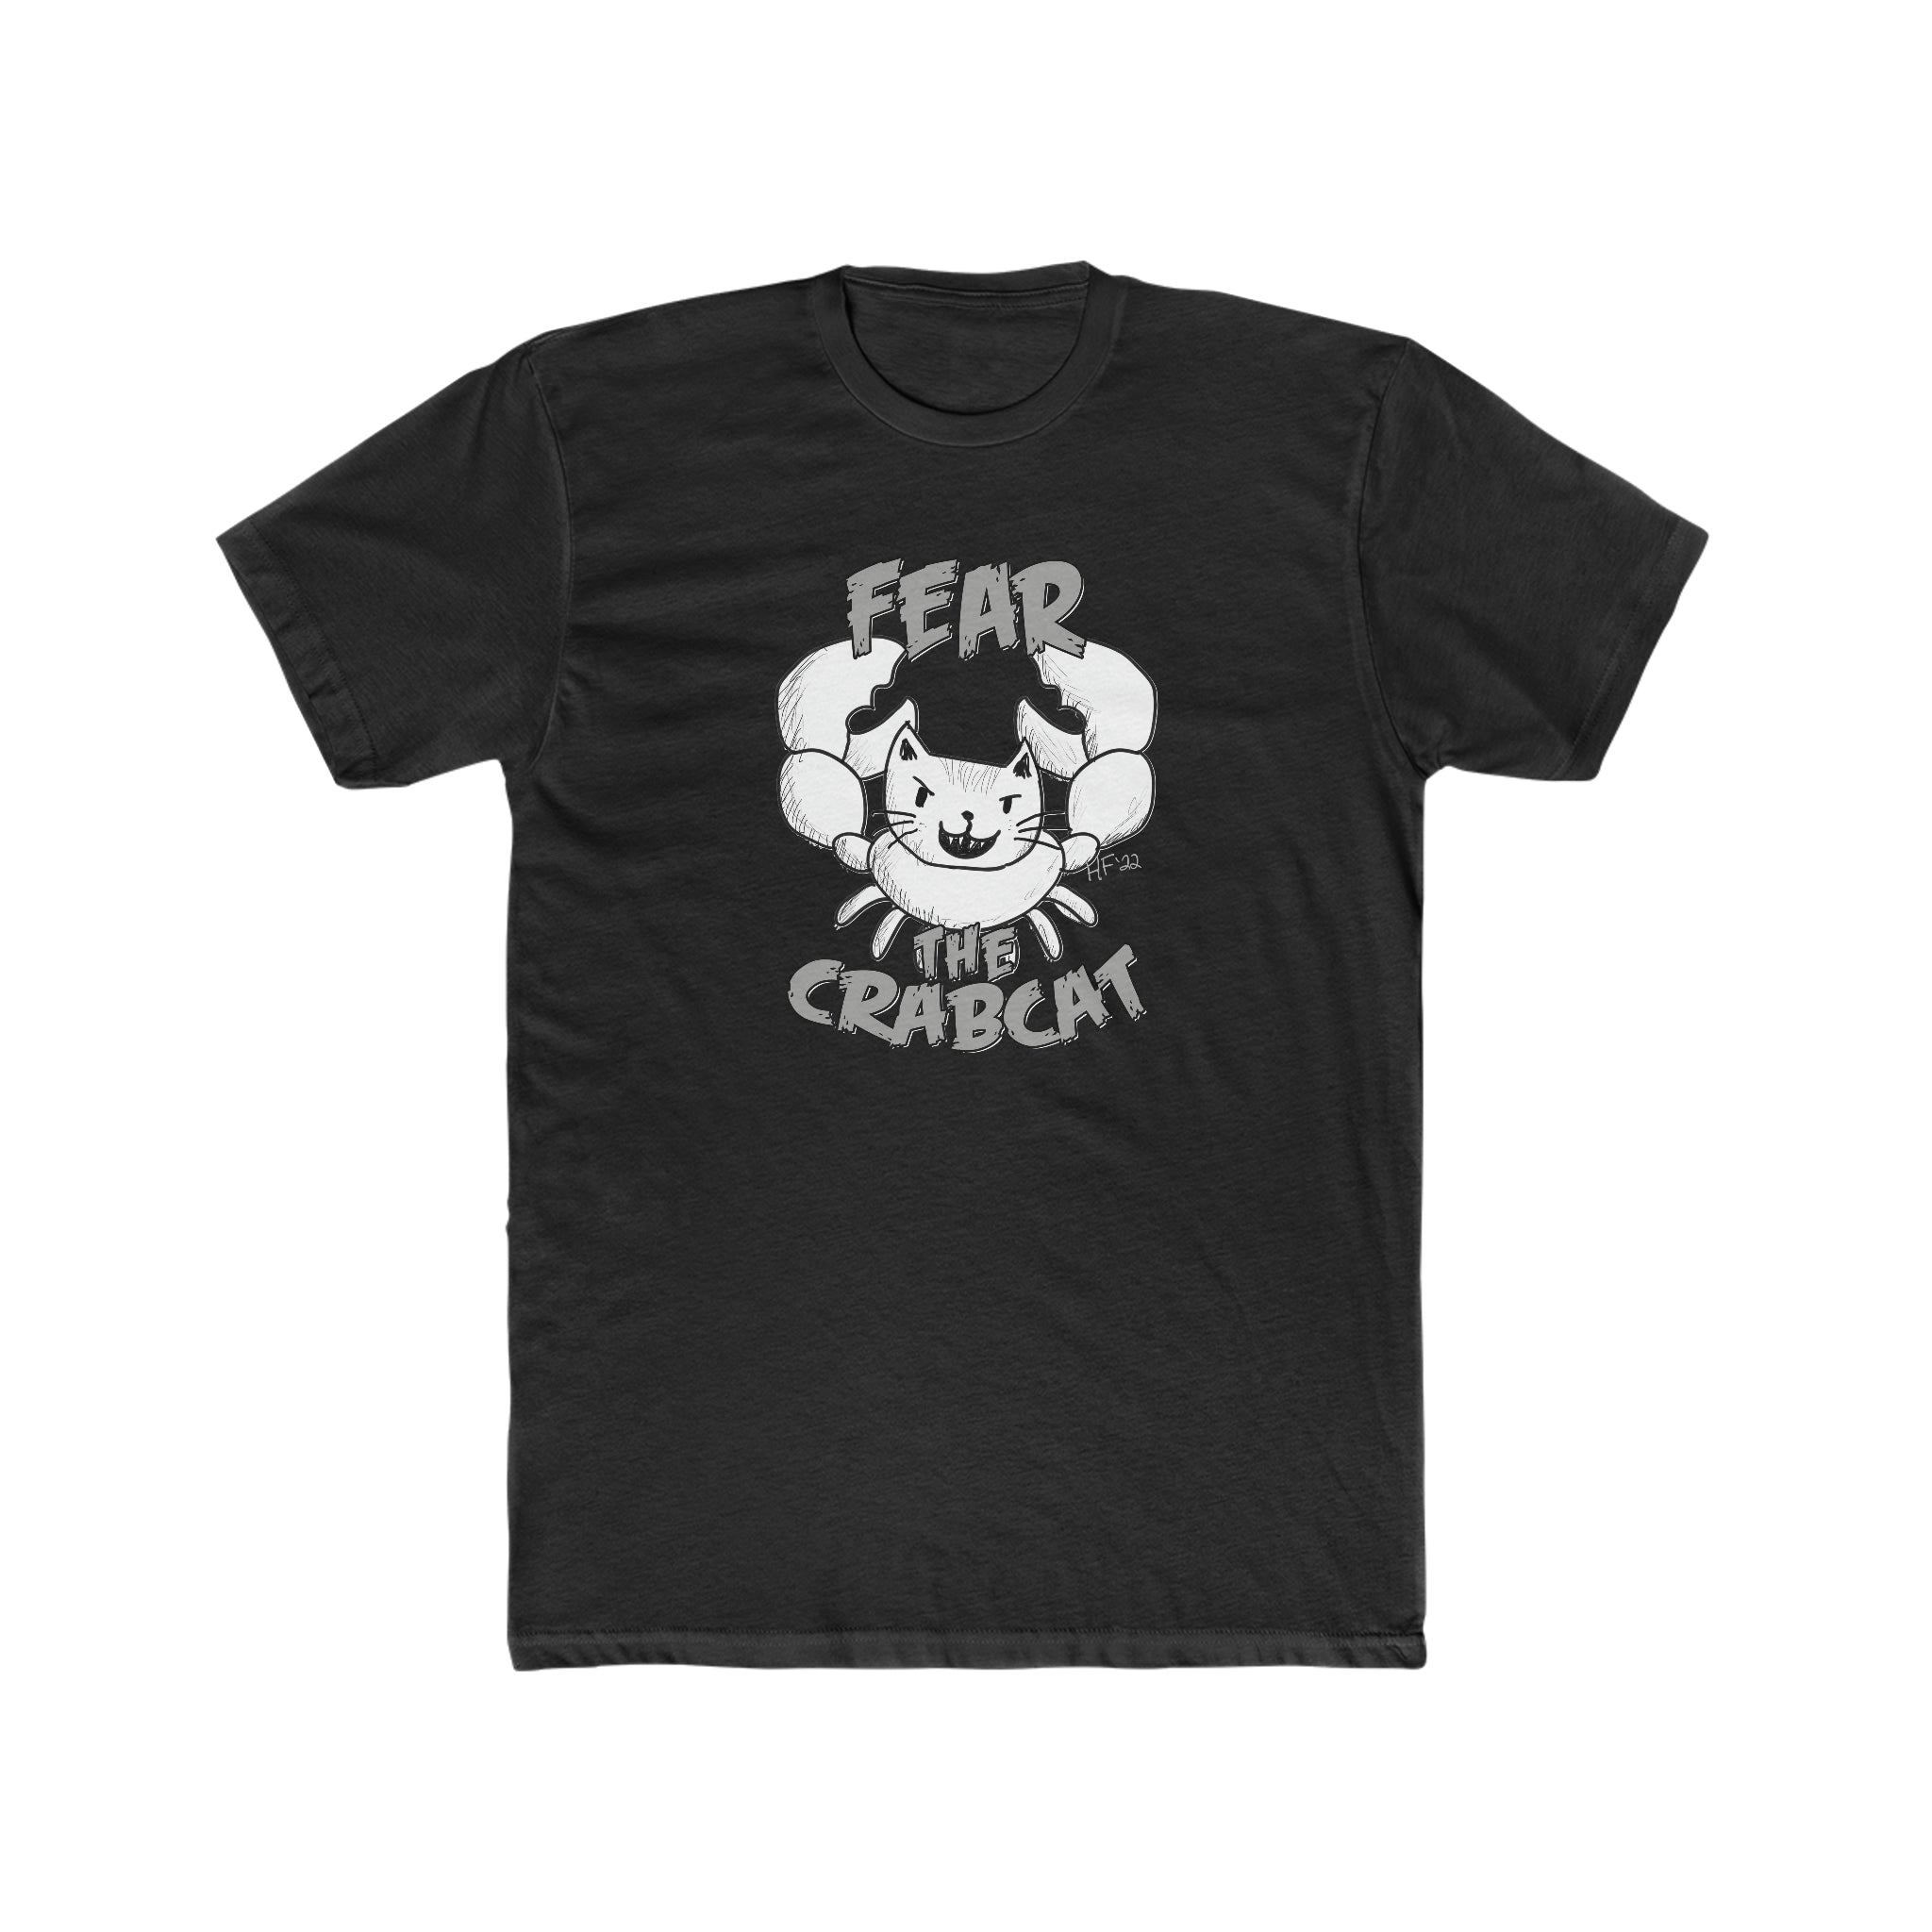 Buy solid-black Fear the Crabcat Unisex T-Shirt